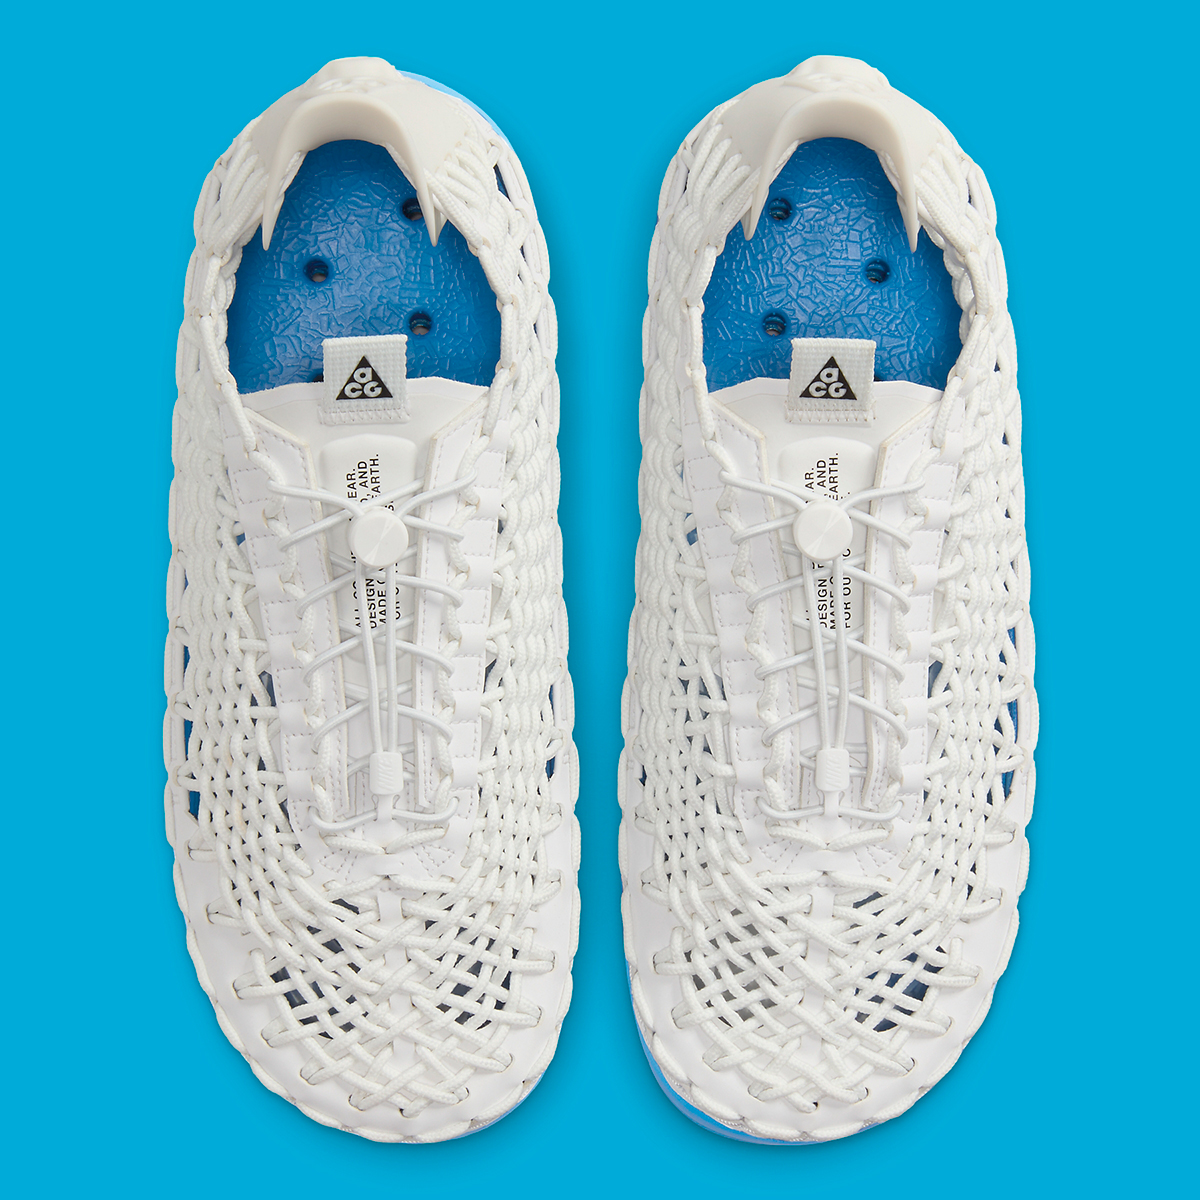 Nike Acg Watercat White Blue Fn5202 100 1